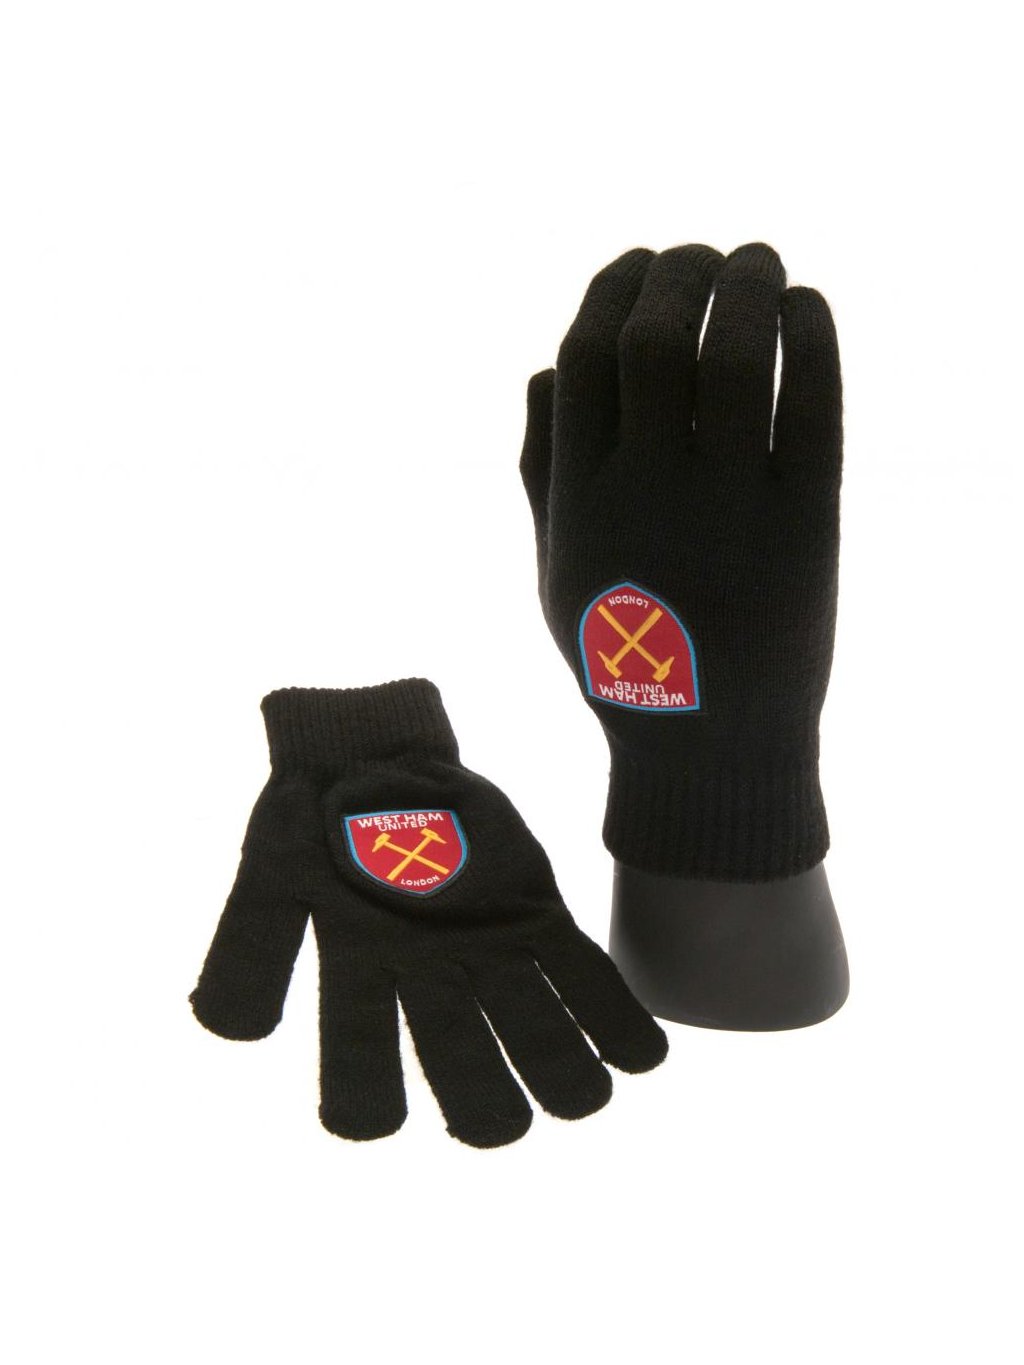 111789 West Ham United FC Knitted Gloves Junior (1)